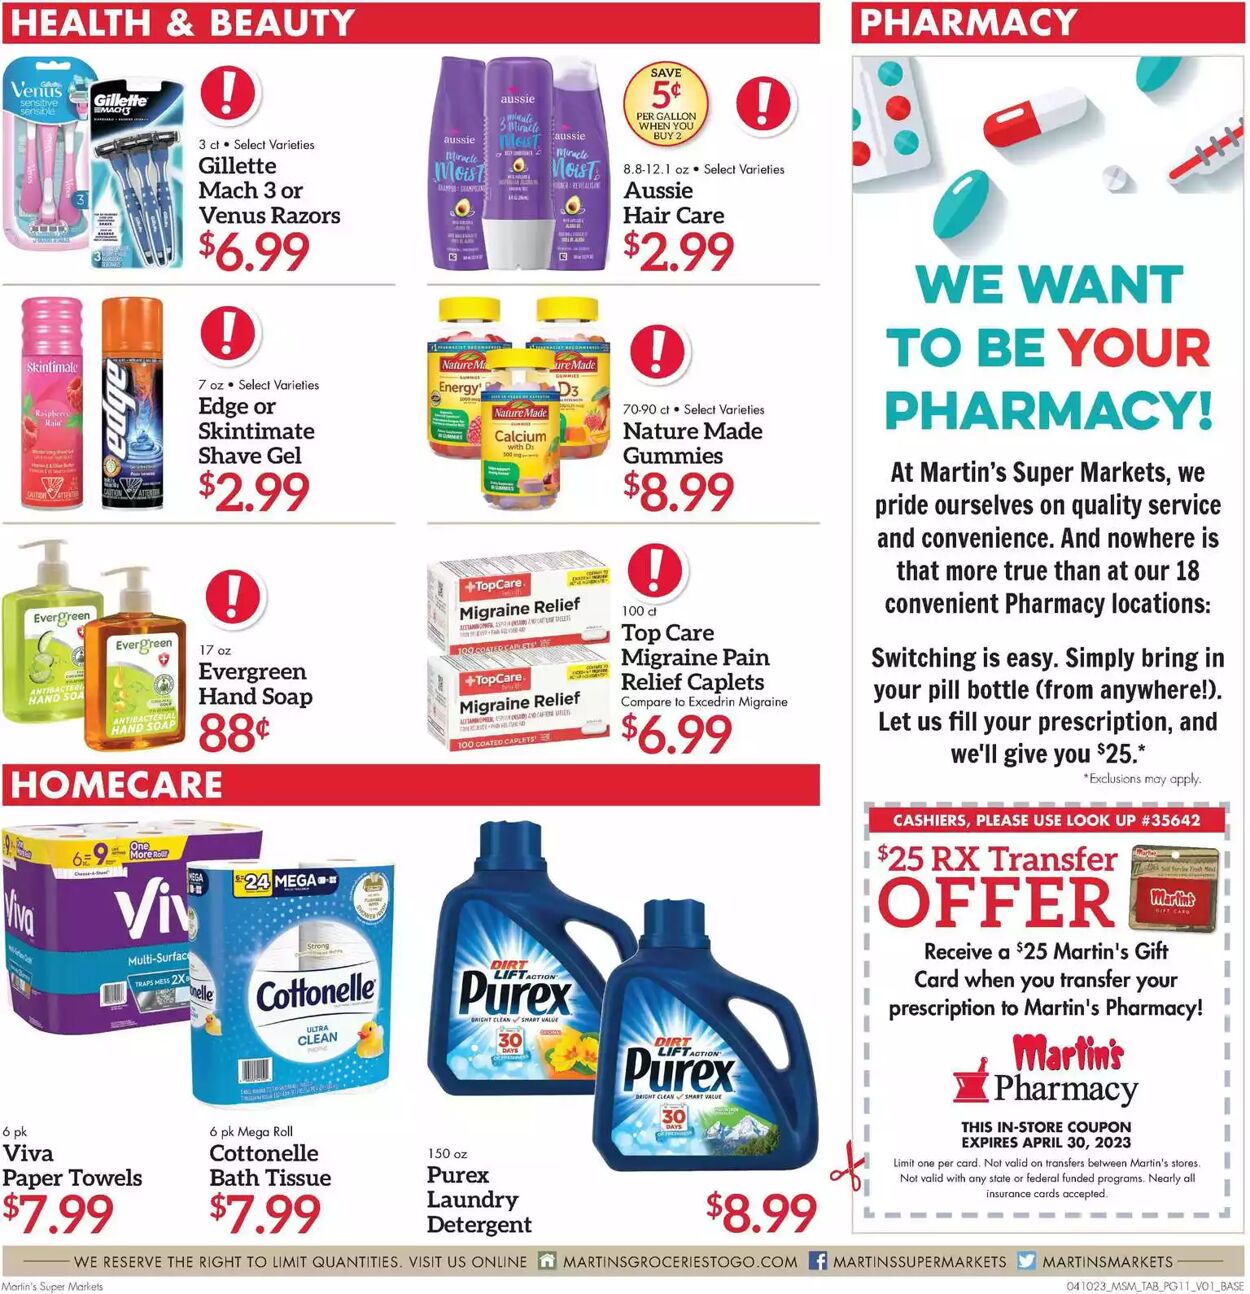 Weekly ad Martin's Supermarkets 04/10/2023 - 04/15/2023